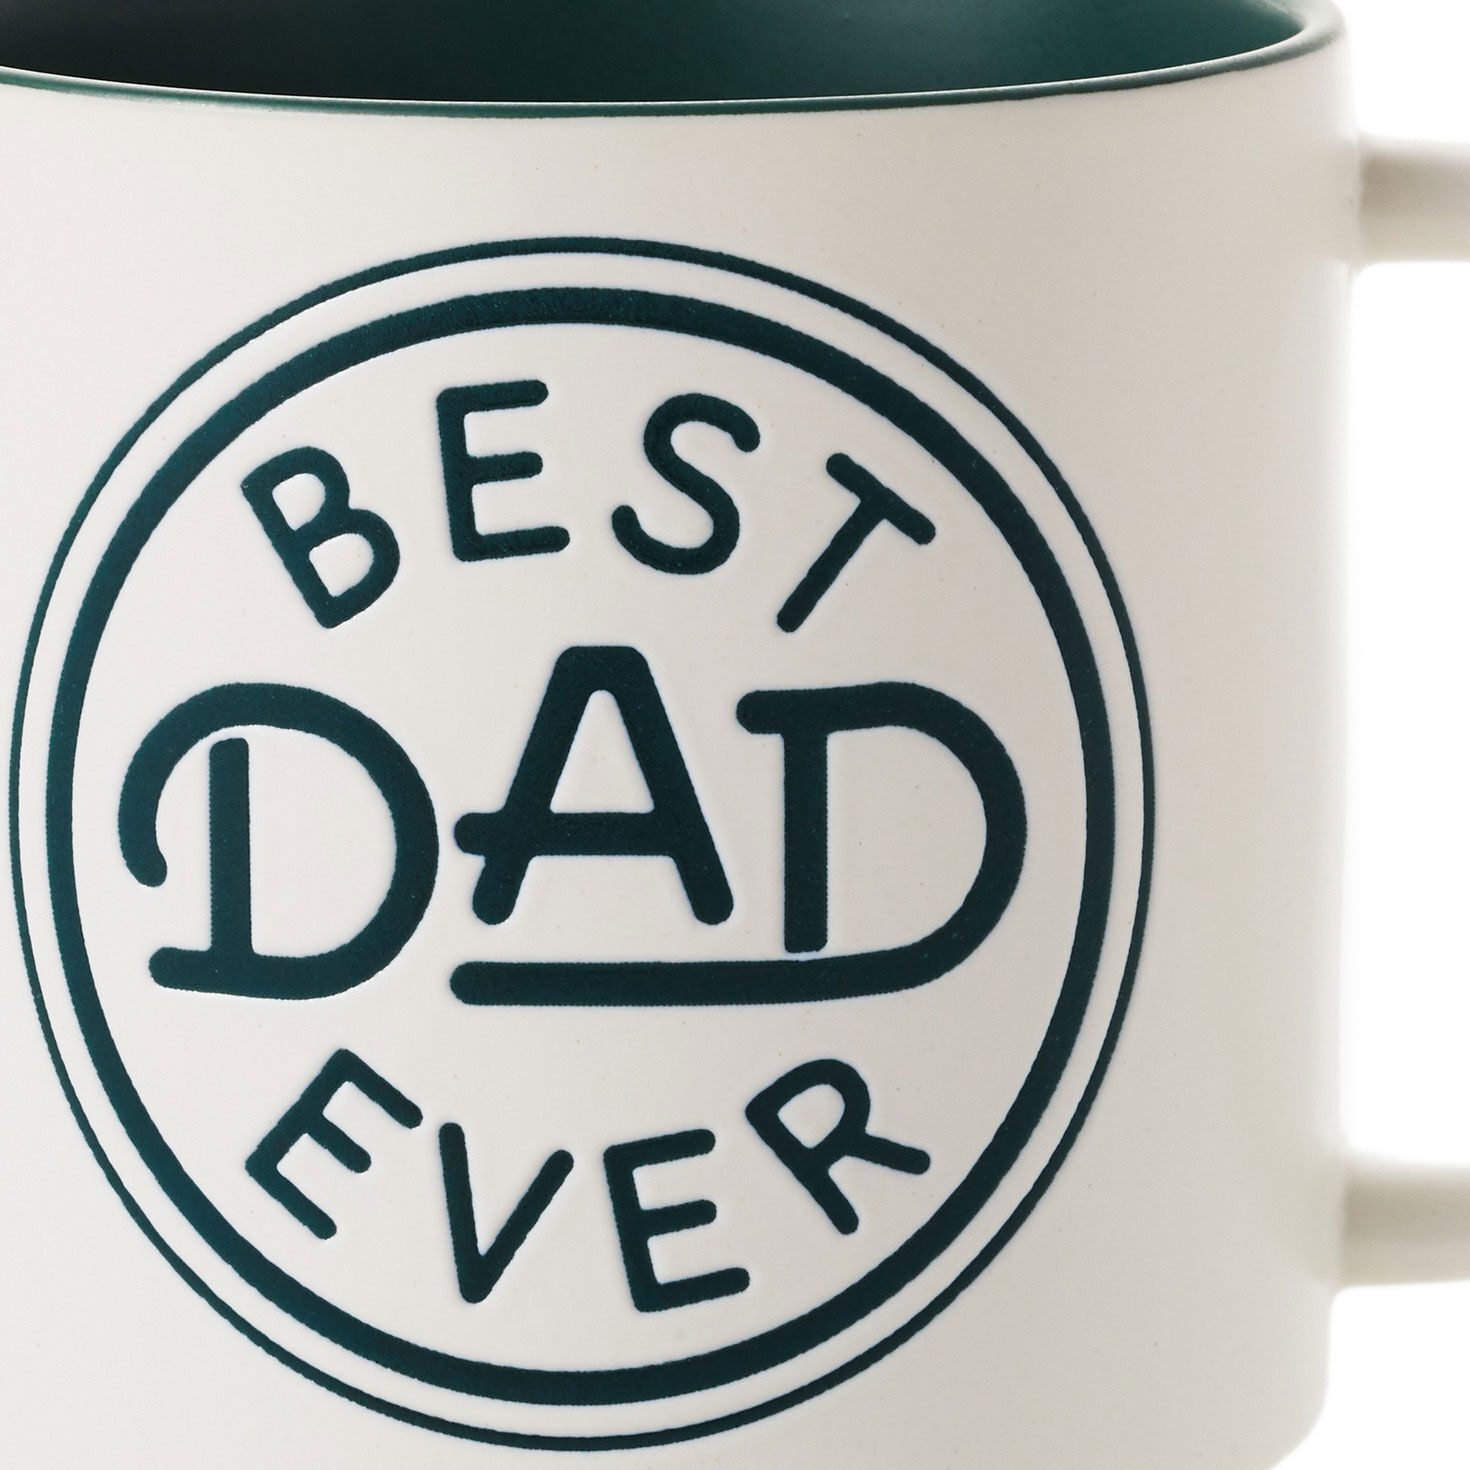 Best Dad Ever Mug, 16 oz. for only USD 16.99 | Hallmark